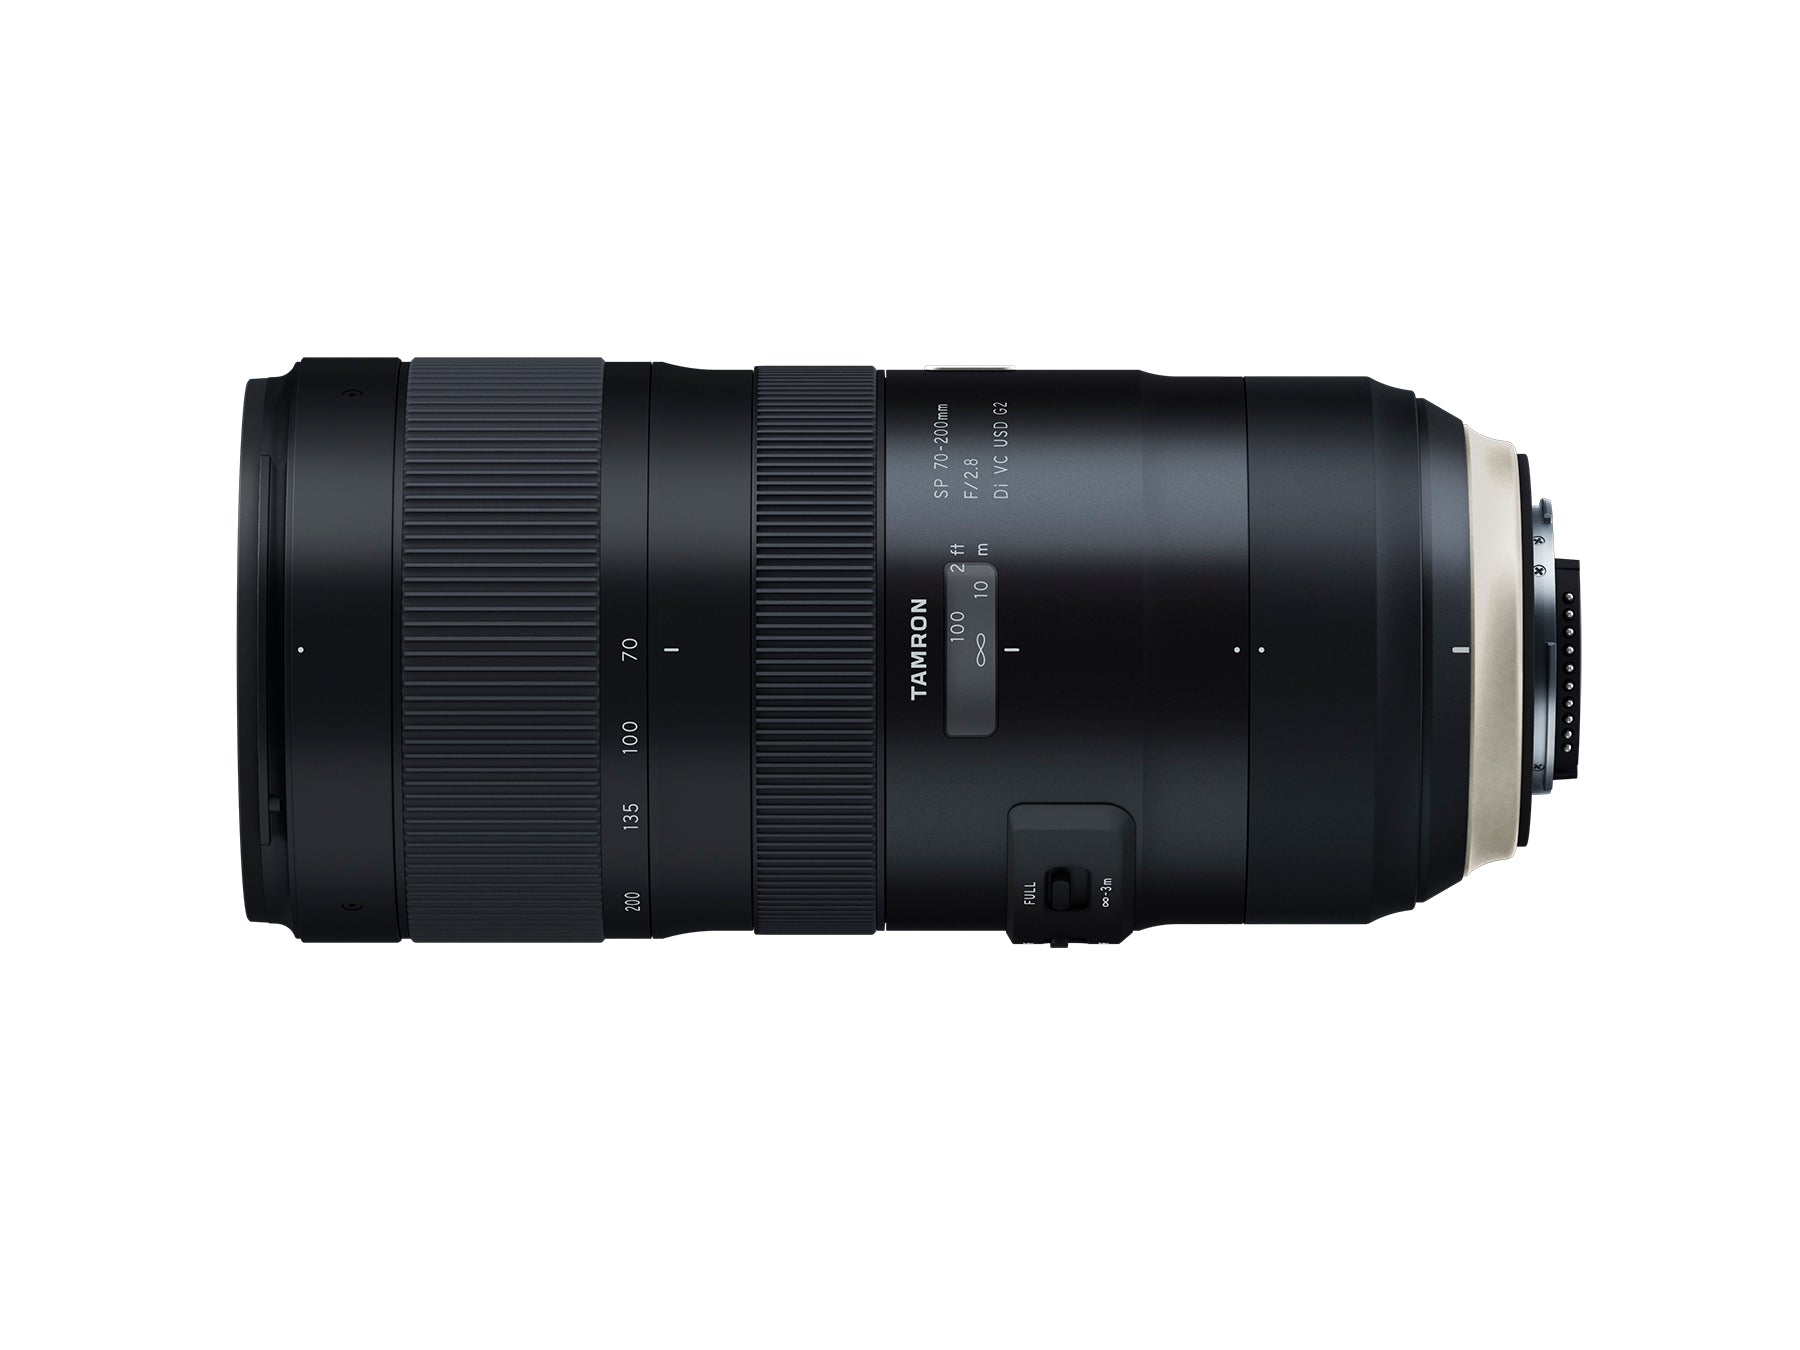 Tamron SP 70-200mm f/2.8 Di VC USD G2 Lens - F mount